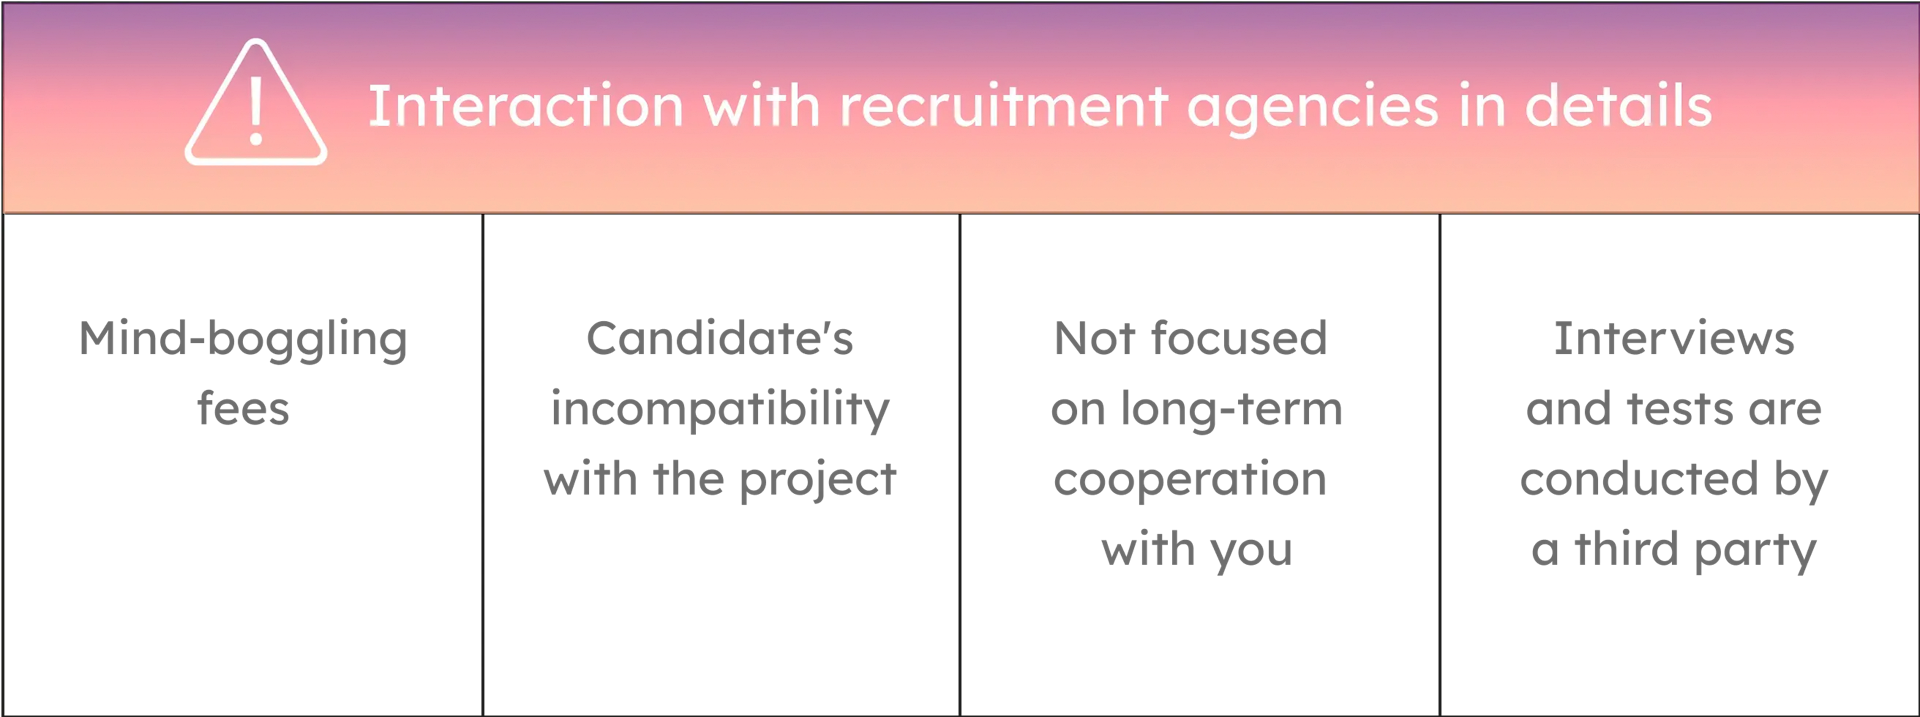 Recruitment agencies in details